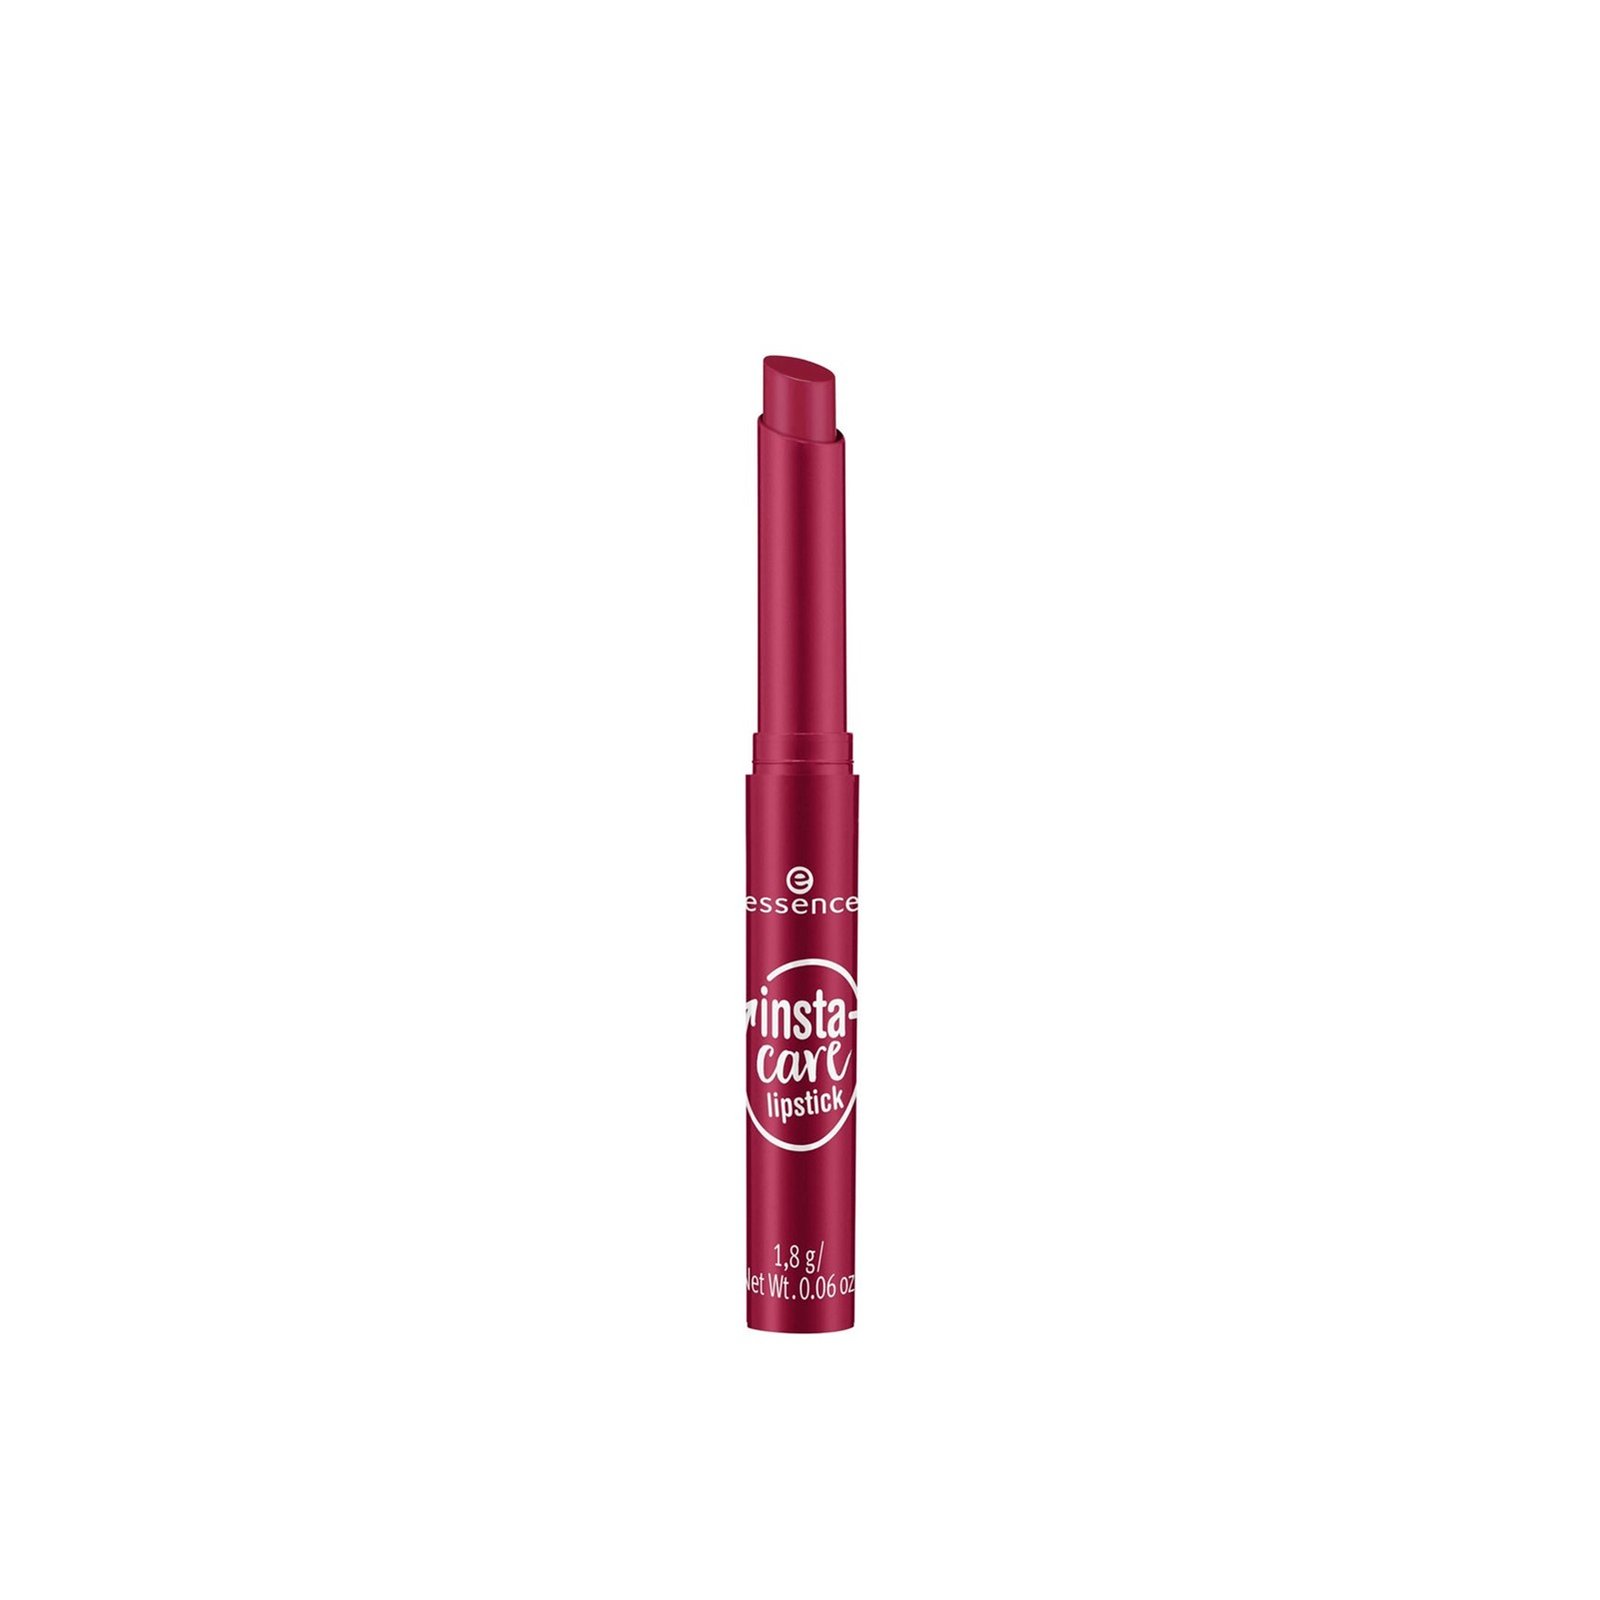 essence Insta-Care Lipstick 03 Refreshing Pause 1.8g (0.06 oz)